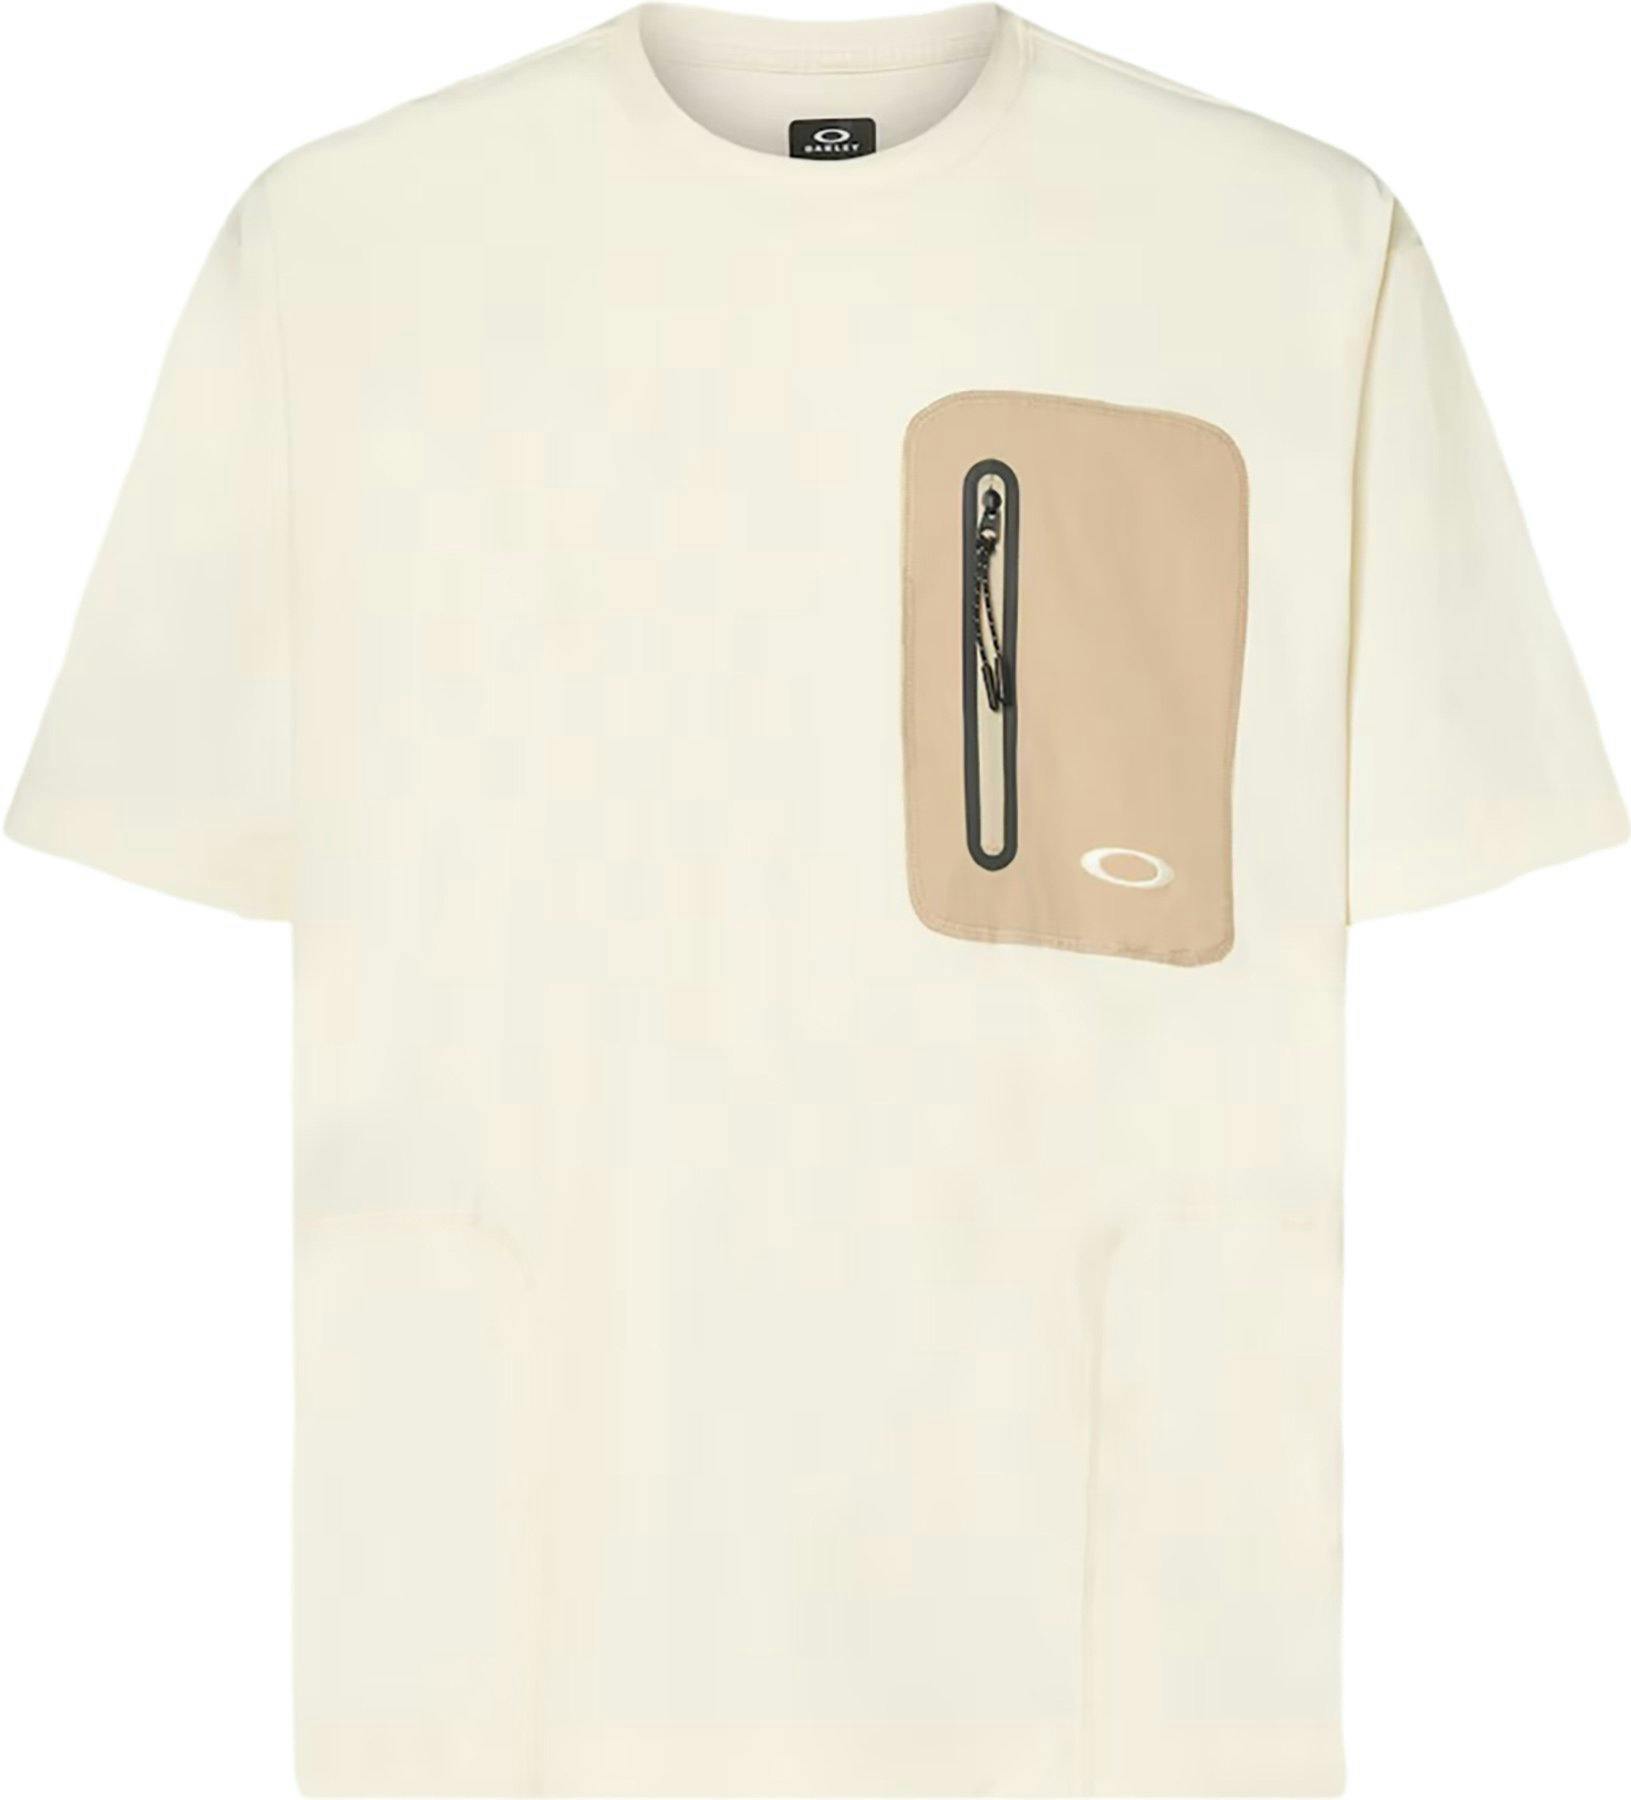 Product image for Latitude Utility Multi-Pocket T-Shirt - Men's